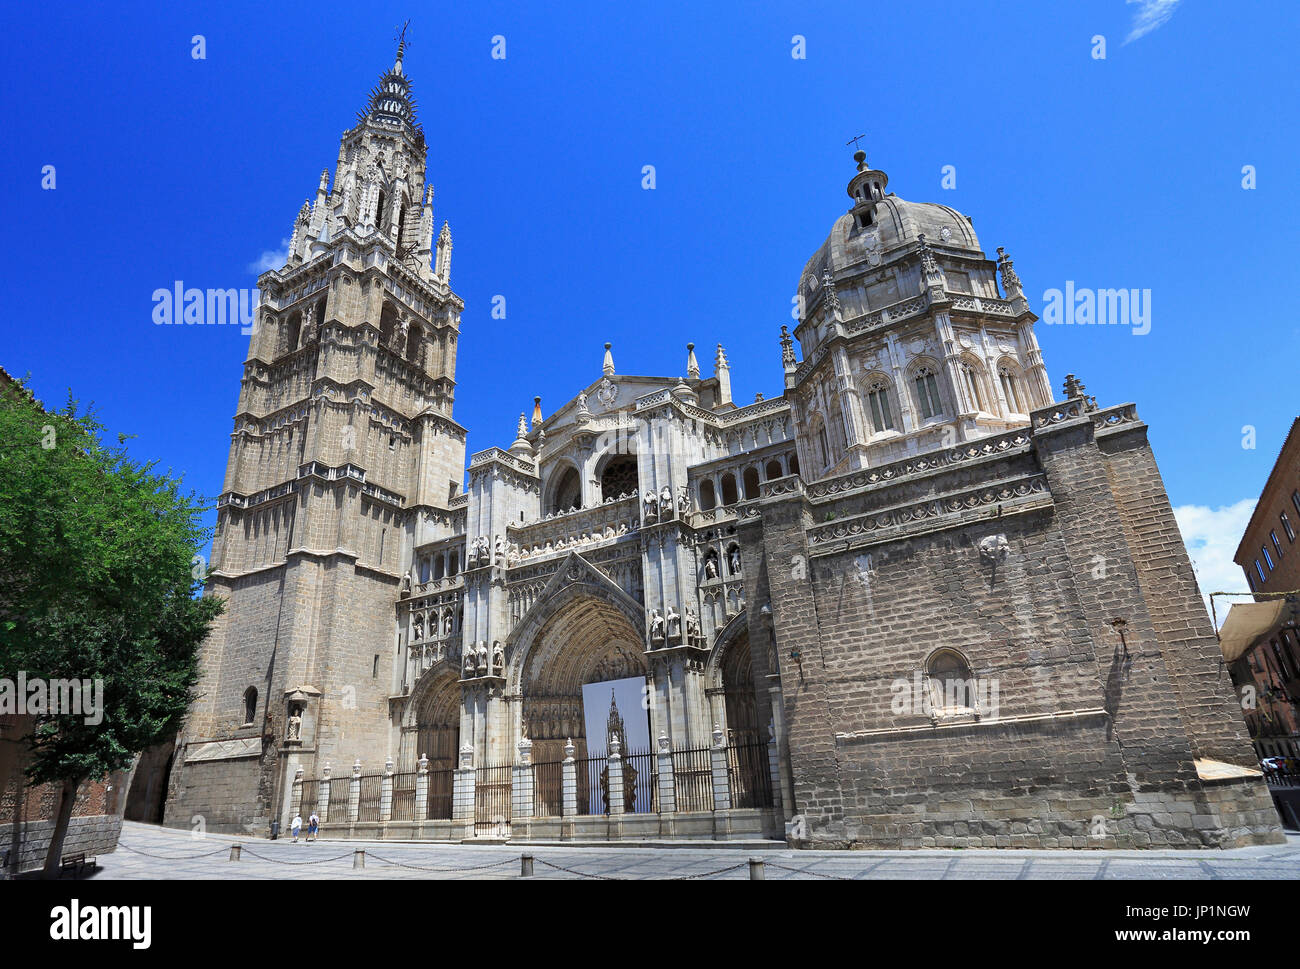 The Primate Cathedral of Saint Mary of Toledo (Catedral Primada Santa Maria de Toledo), a Roman Catholic cathedral in Toledo, Spain. Stock Photo